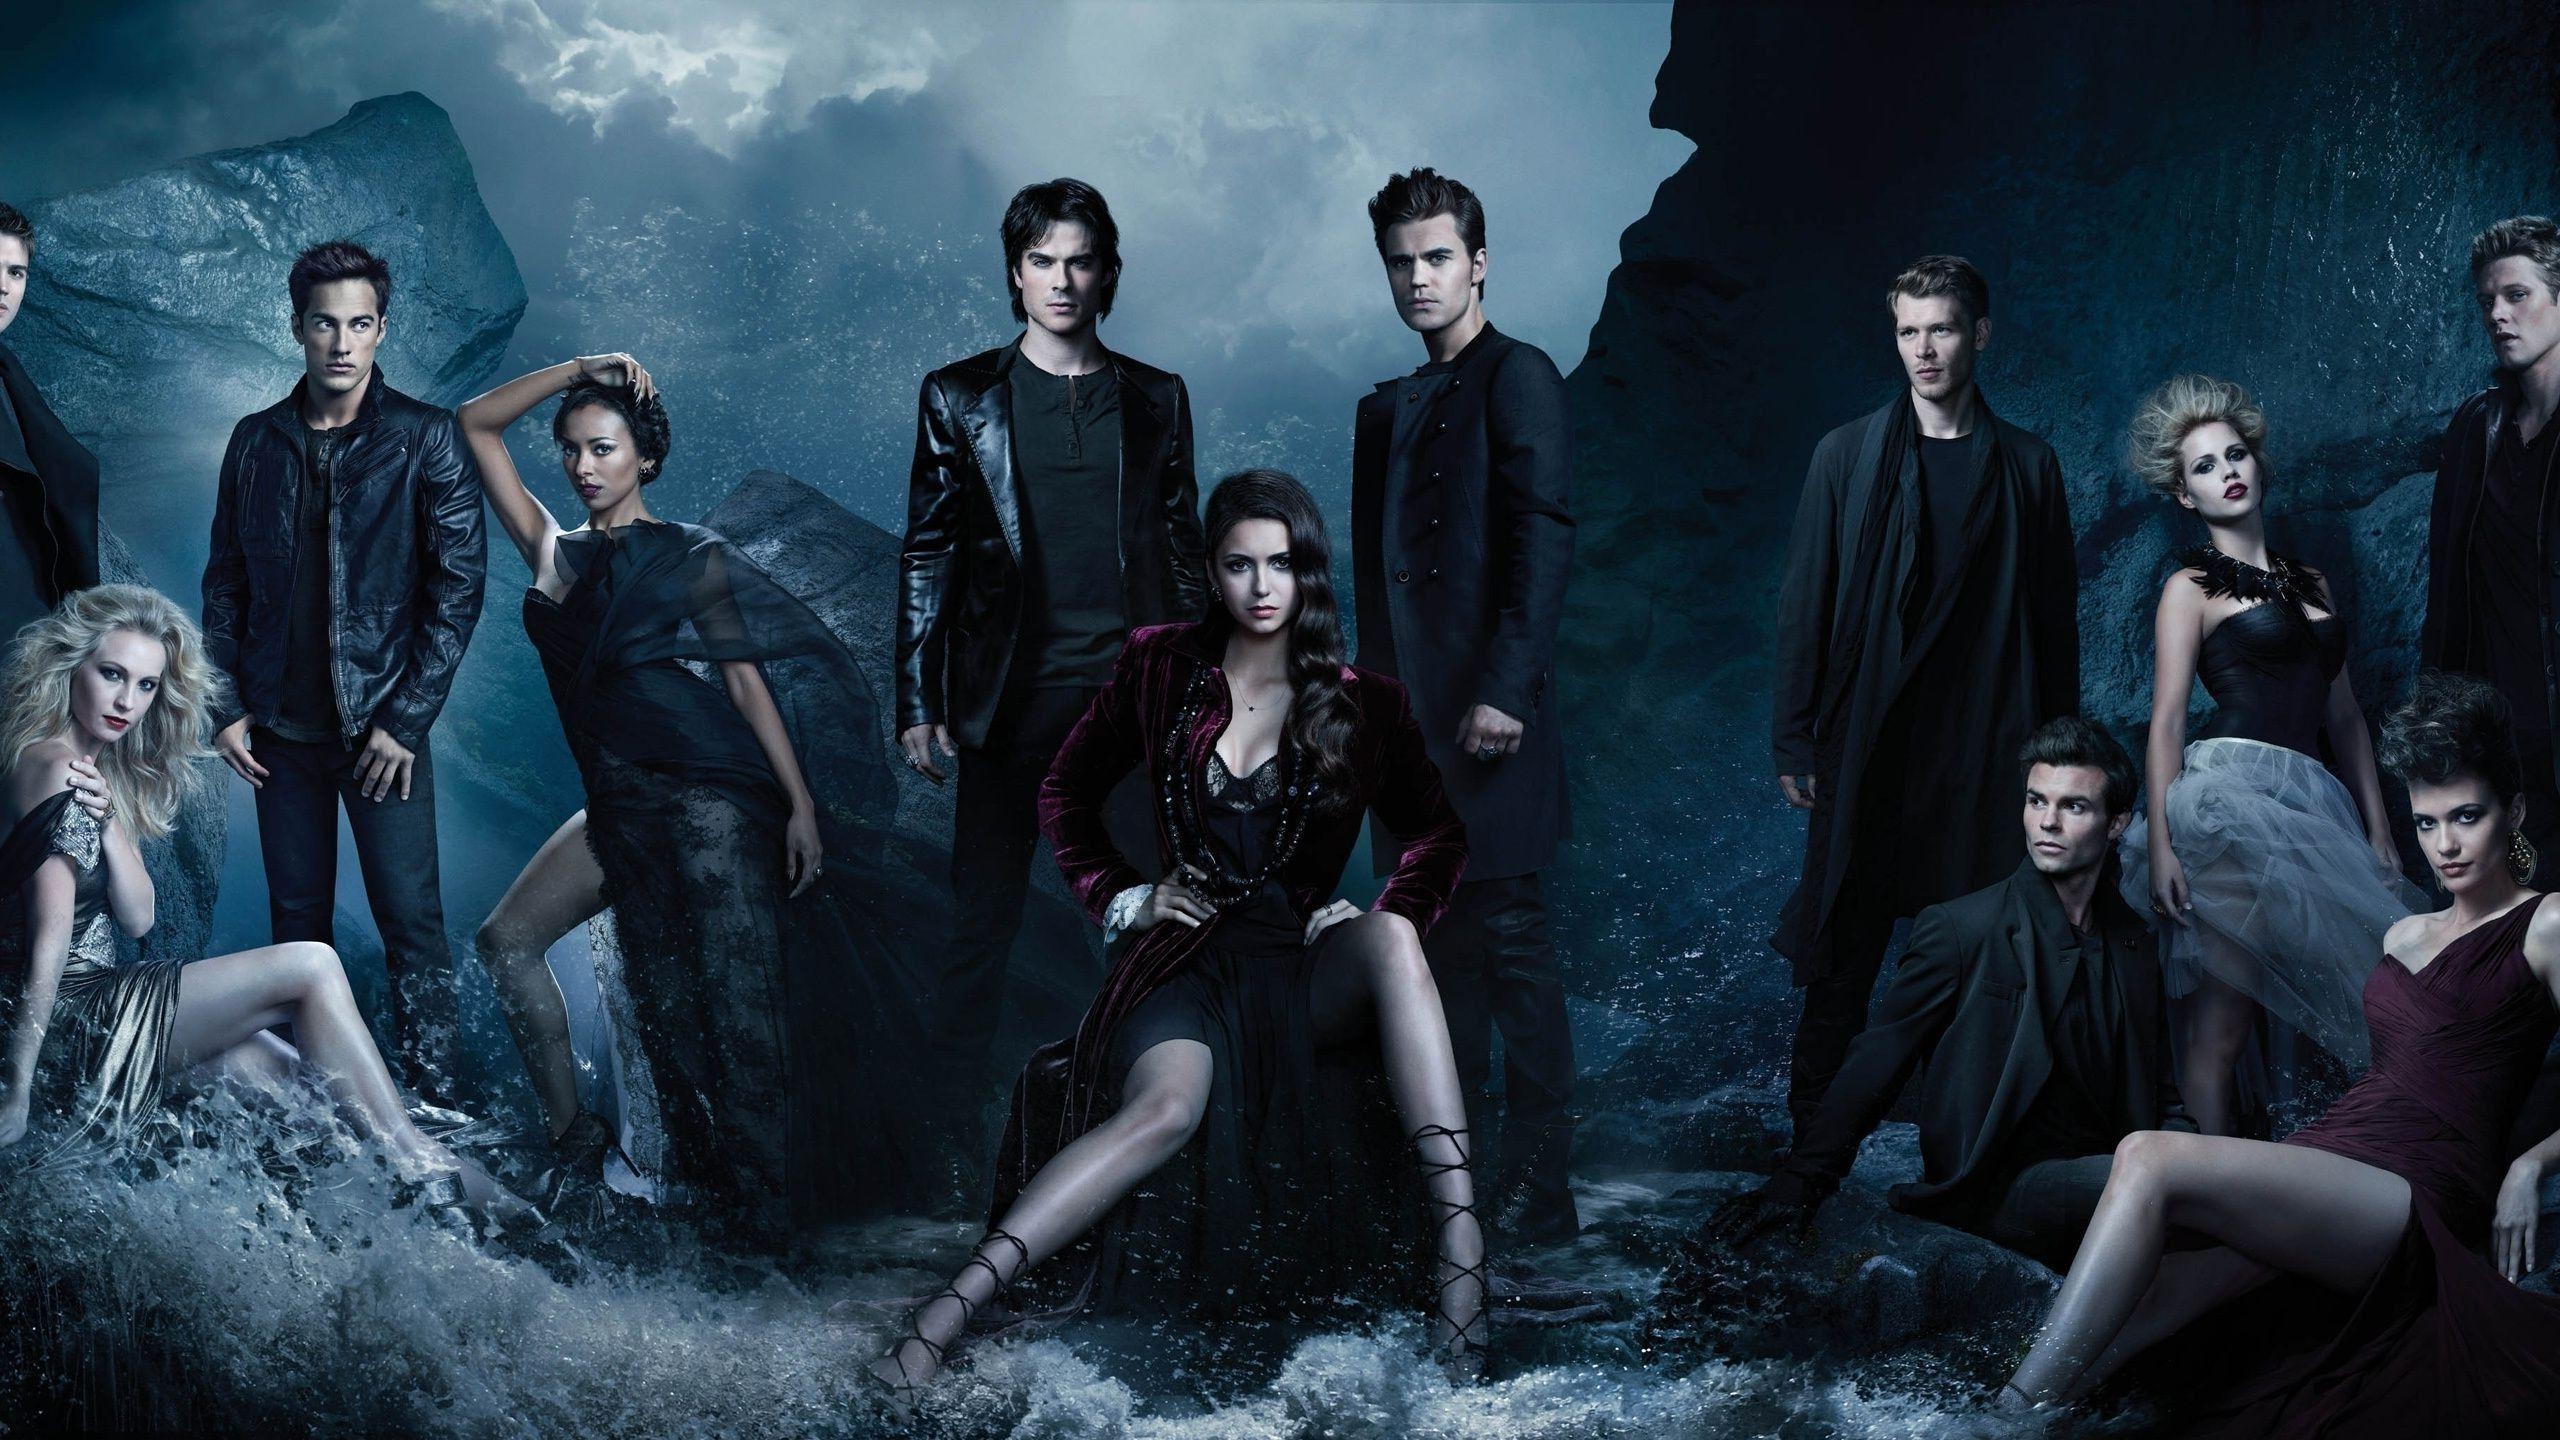 The Vampire Diaries Wallpapers Top Free The Vampire Diaries